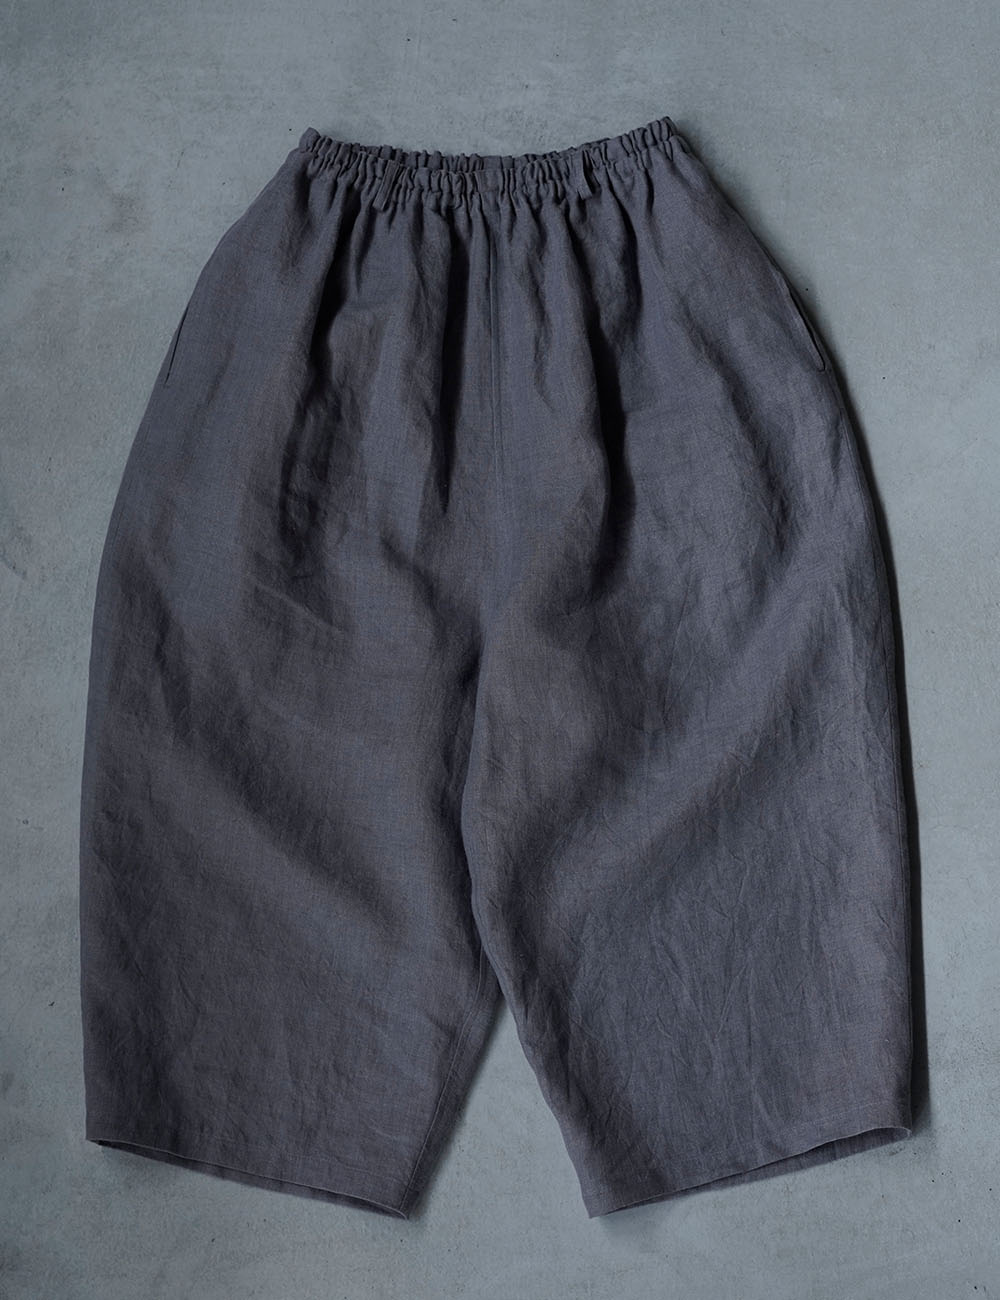 【wafu】 cropped Linen pants 男女兼用 クロップド丈 リネンパンツ 先染め 中厚地 /スチール・グレイ b018g-stg2